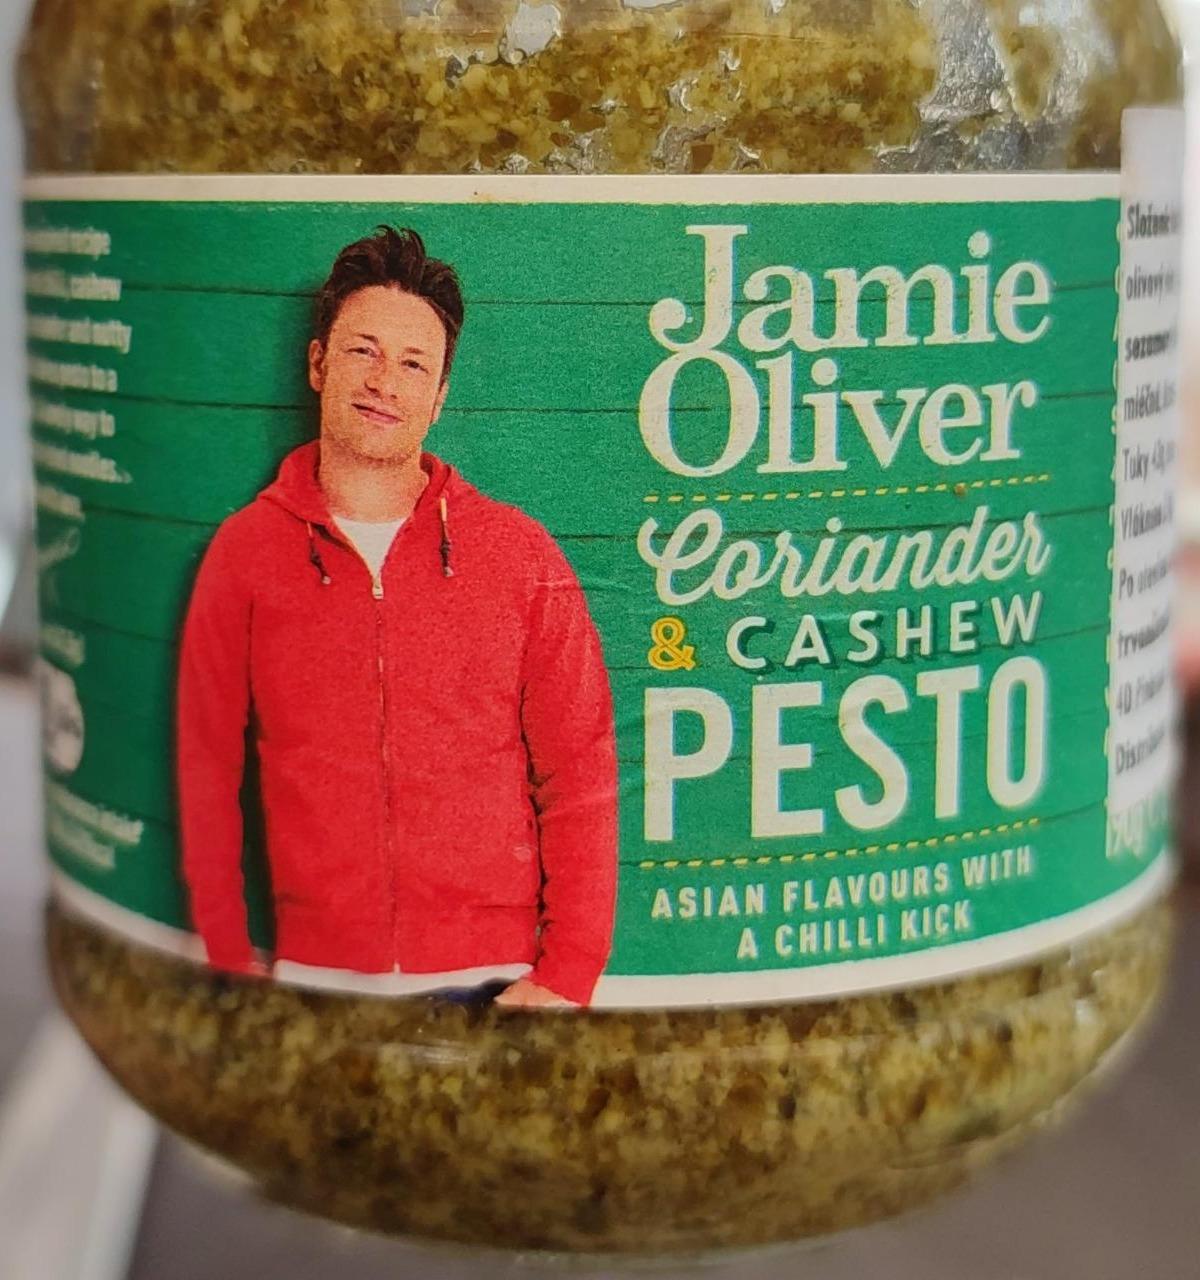 Fotografie - Pesto Coriander & Cashew Jamie Oliver